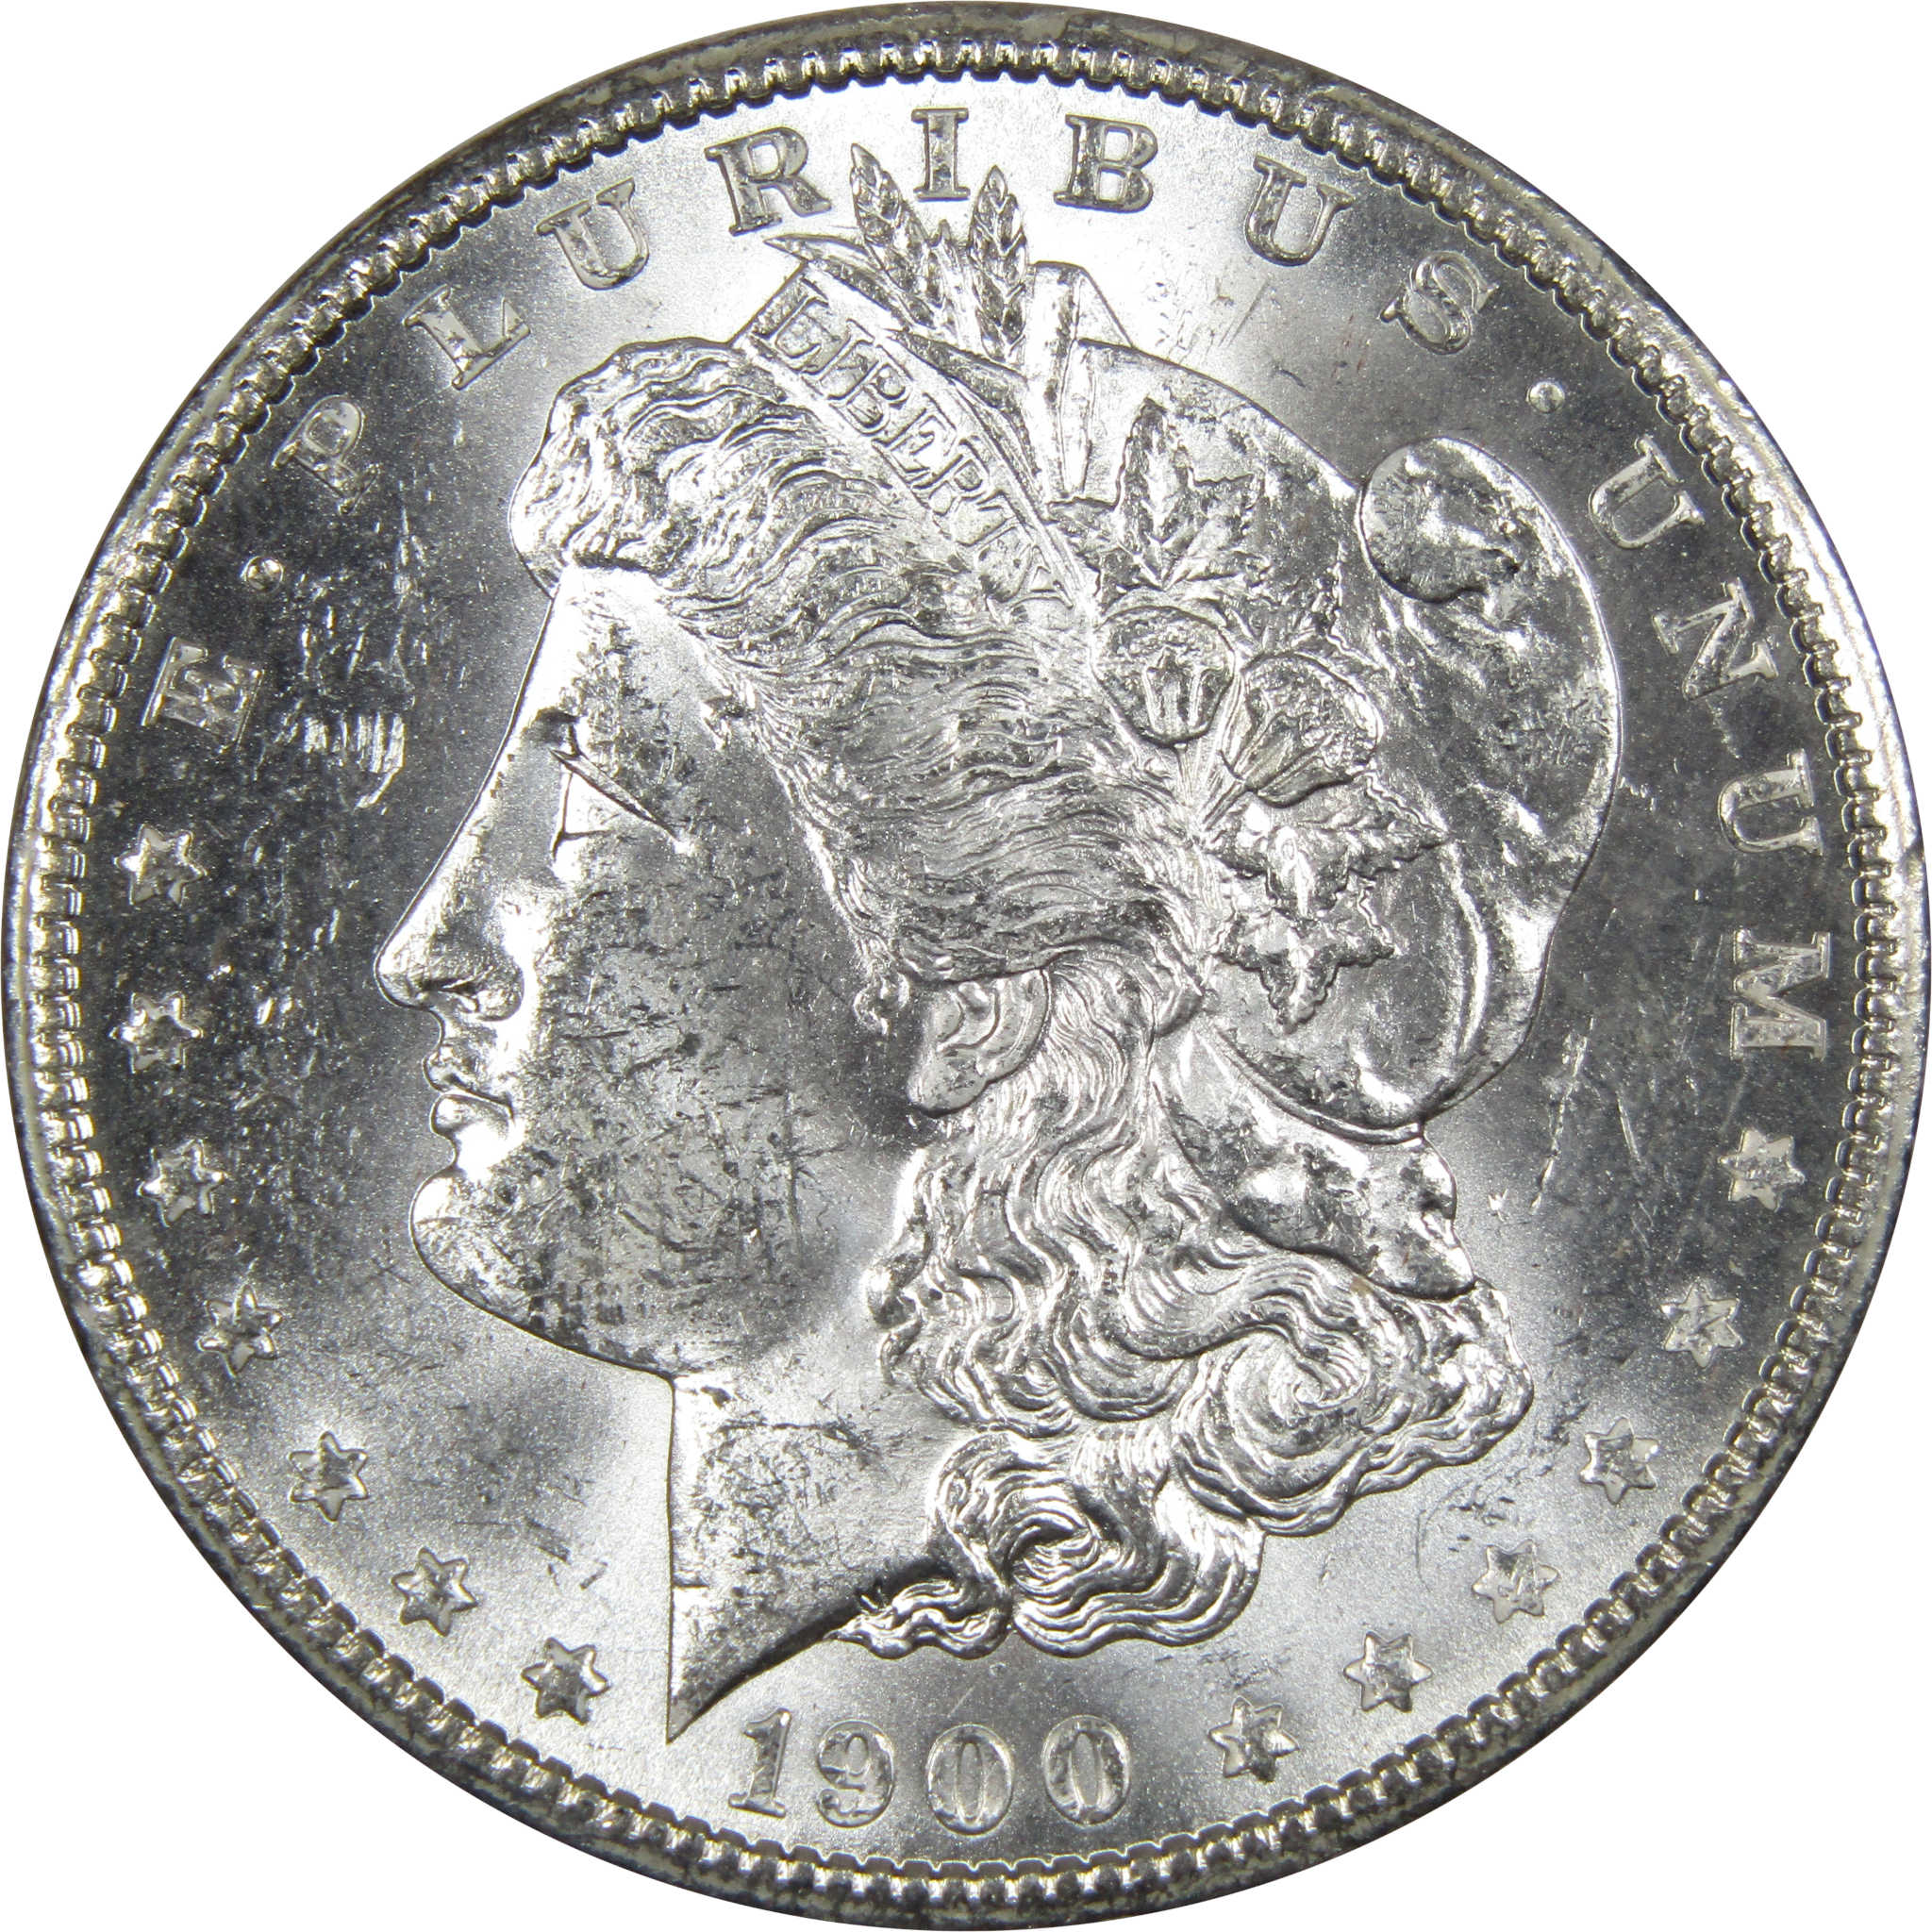 1900 O Morgan Dollar BU Uncirculated Mint State 90% Silver SKU:IPC9791 - Morgan coin - Morgan silver dollar - Morgan silver dollar for sale - Profile Coins &amp; Collectibles